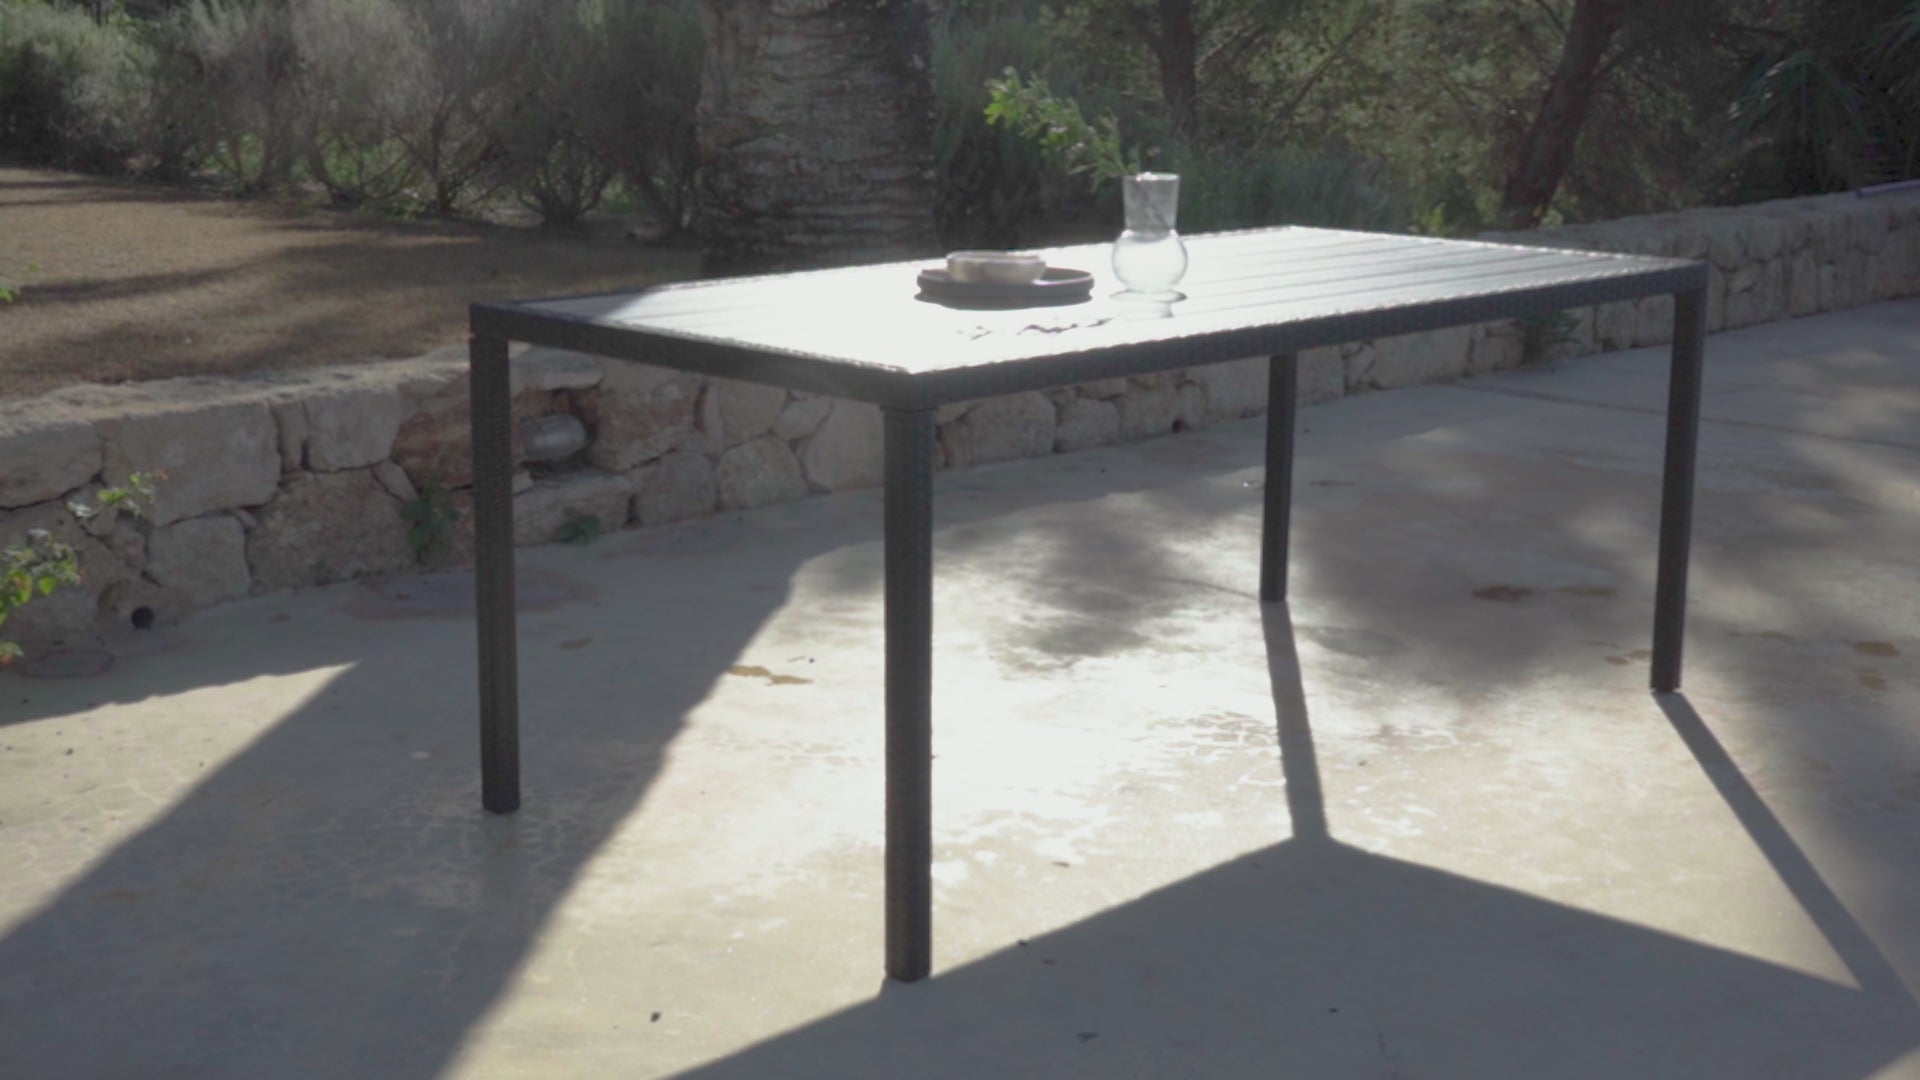 Marston 6 Seater Rattan Outdoor Dining Set with Cream Parasol - Rattan Garden Furniture - Black - Polywood Top